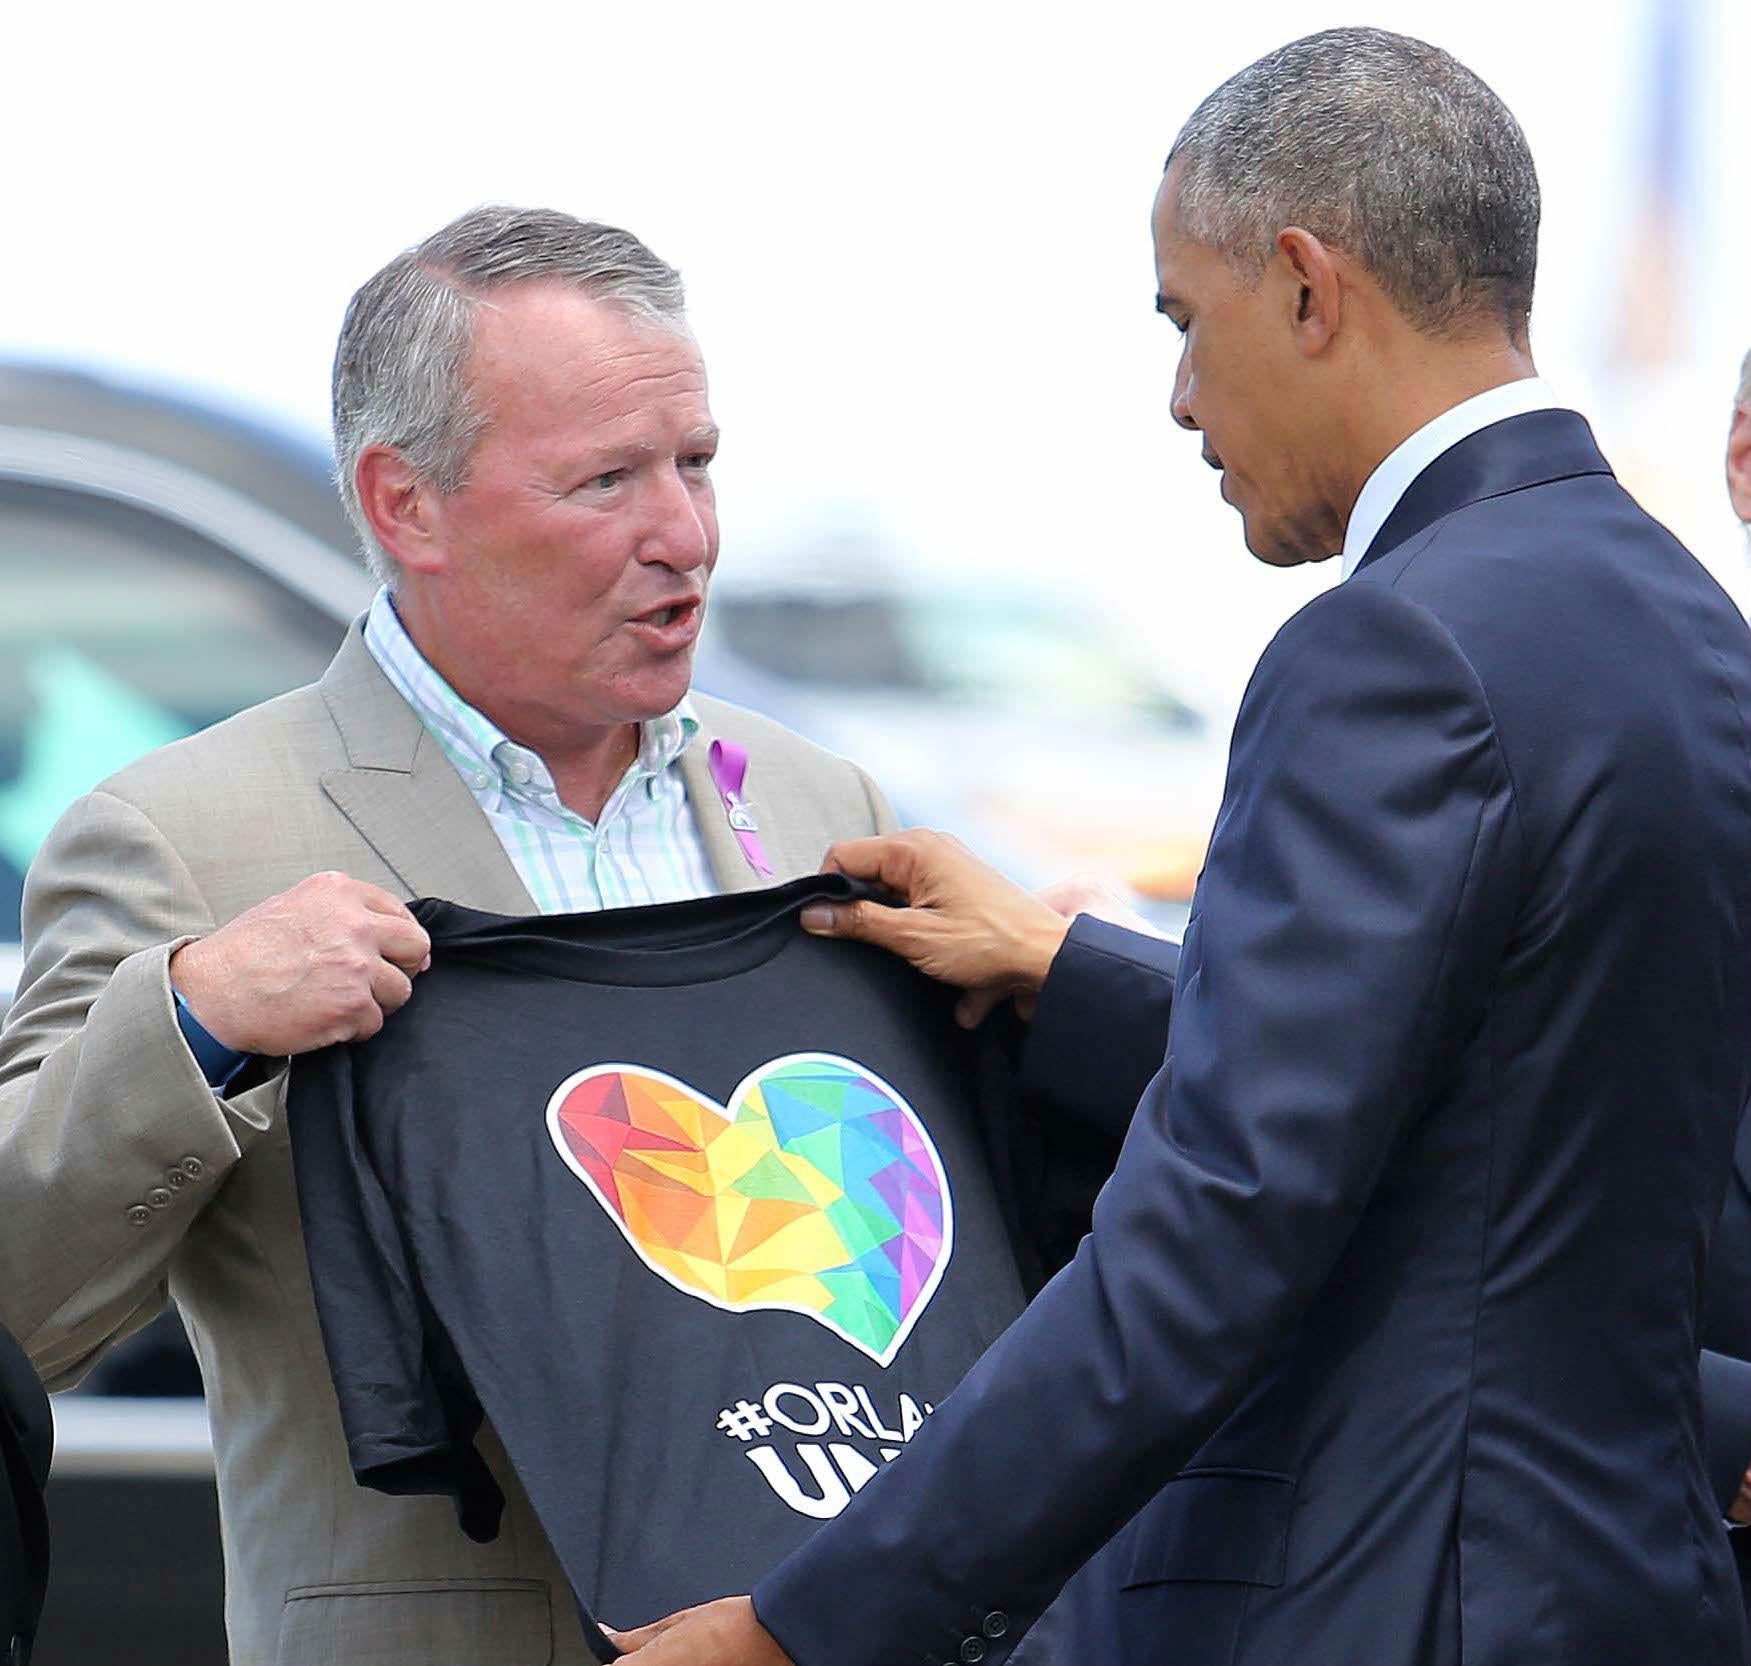 Mr Obama met with Orlando mayor Buddy Dyer